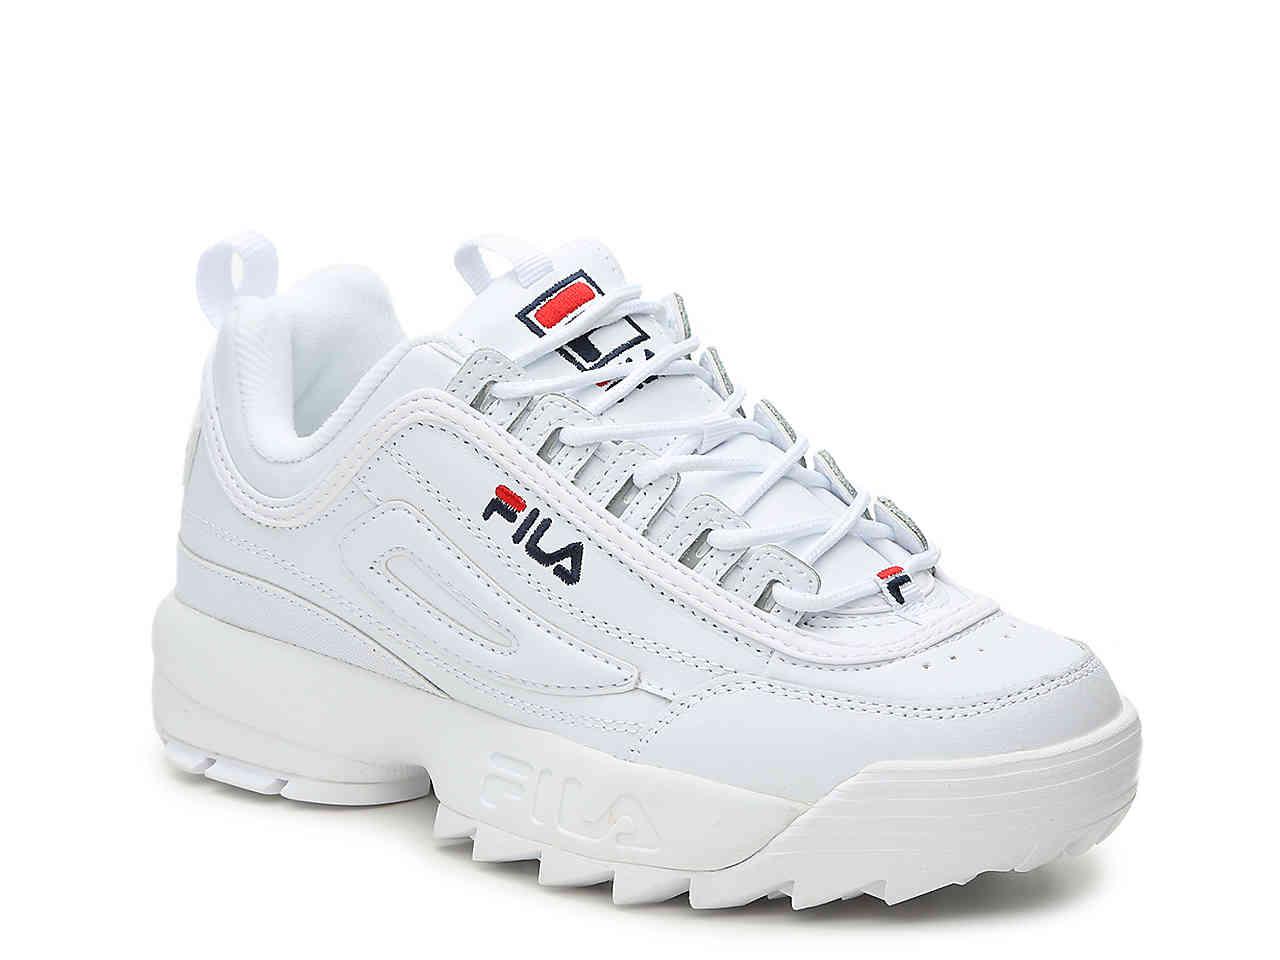 Lyst - Fila Disruptor Ii Premium Sneaker in White for Men